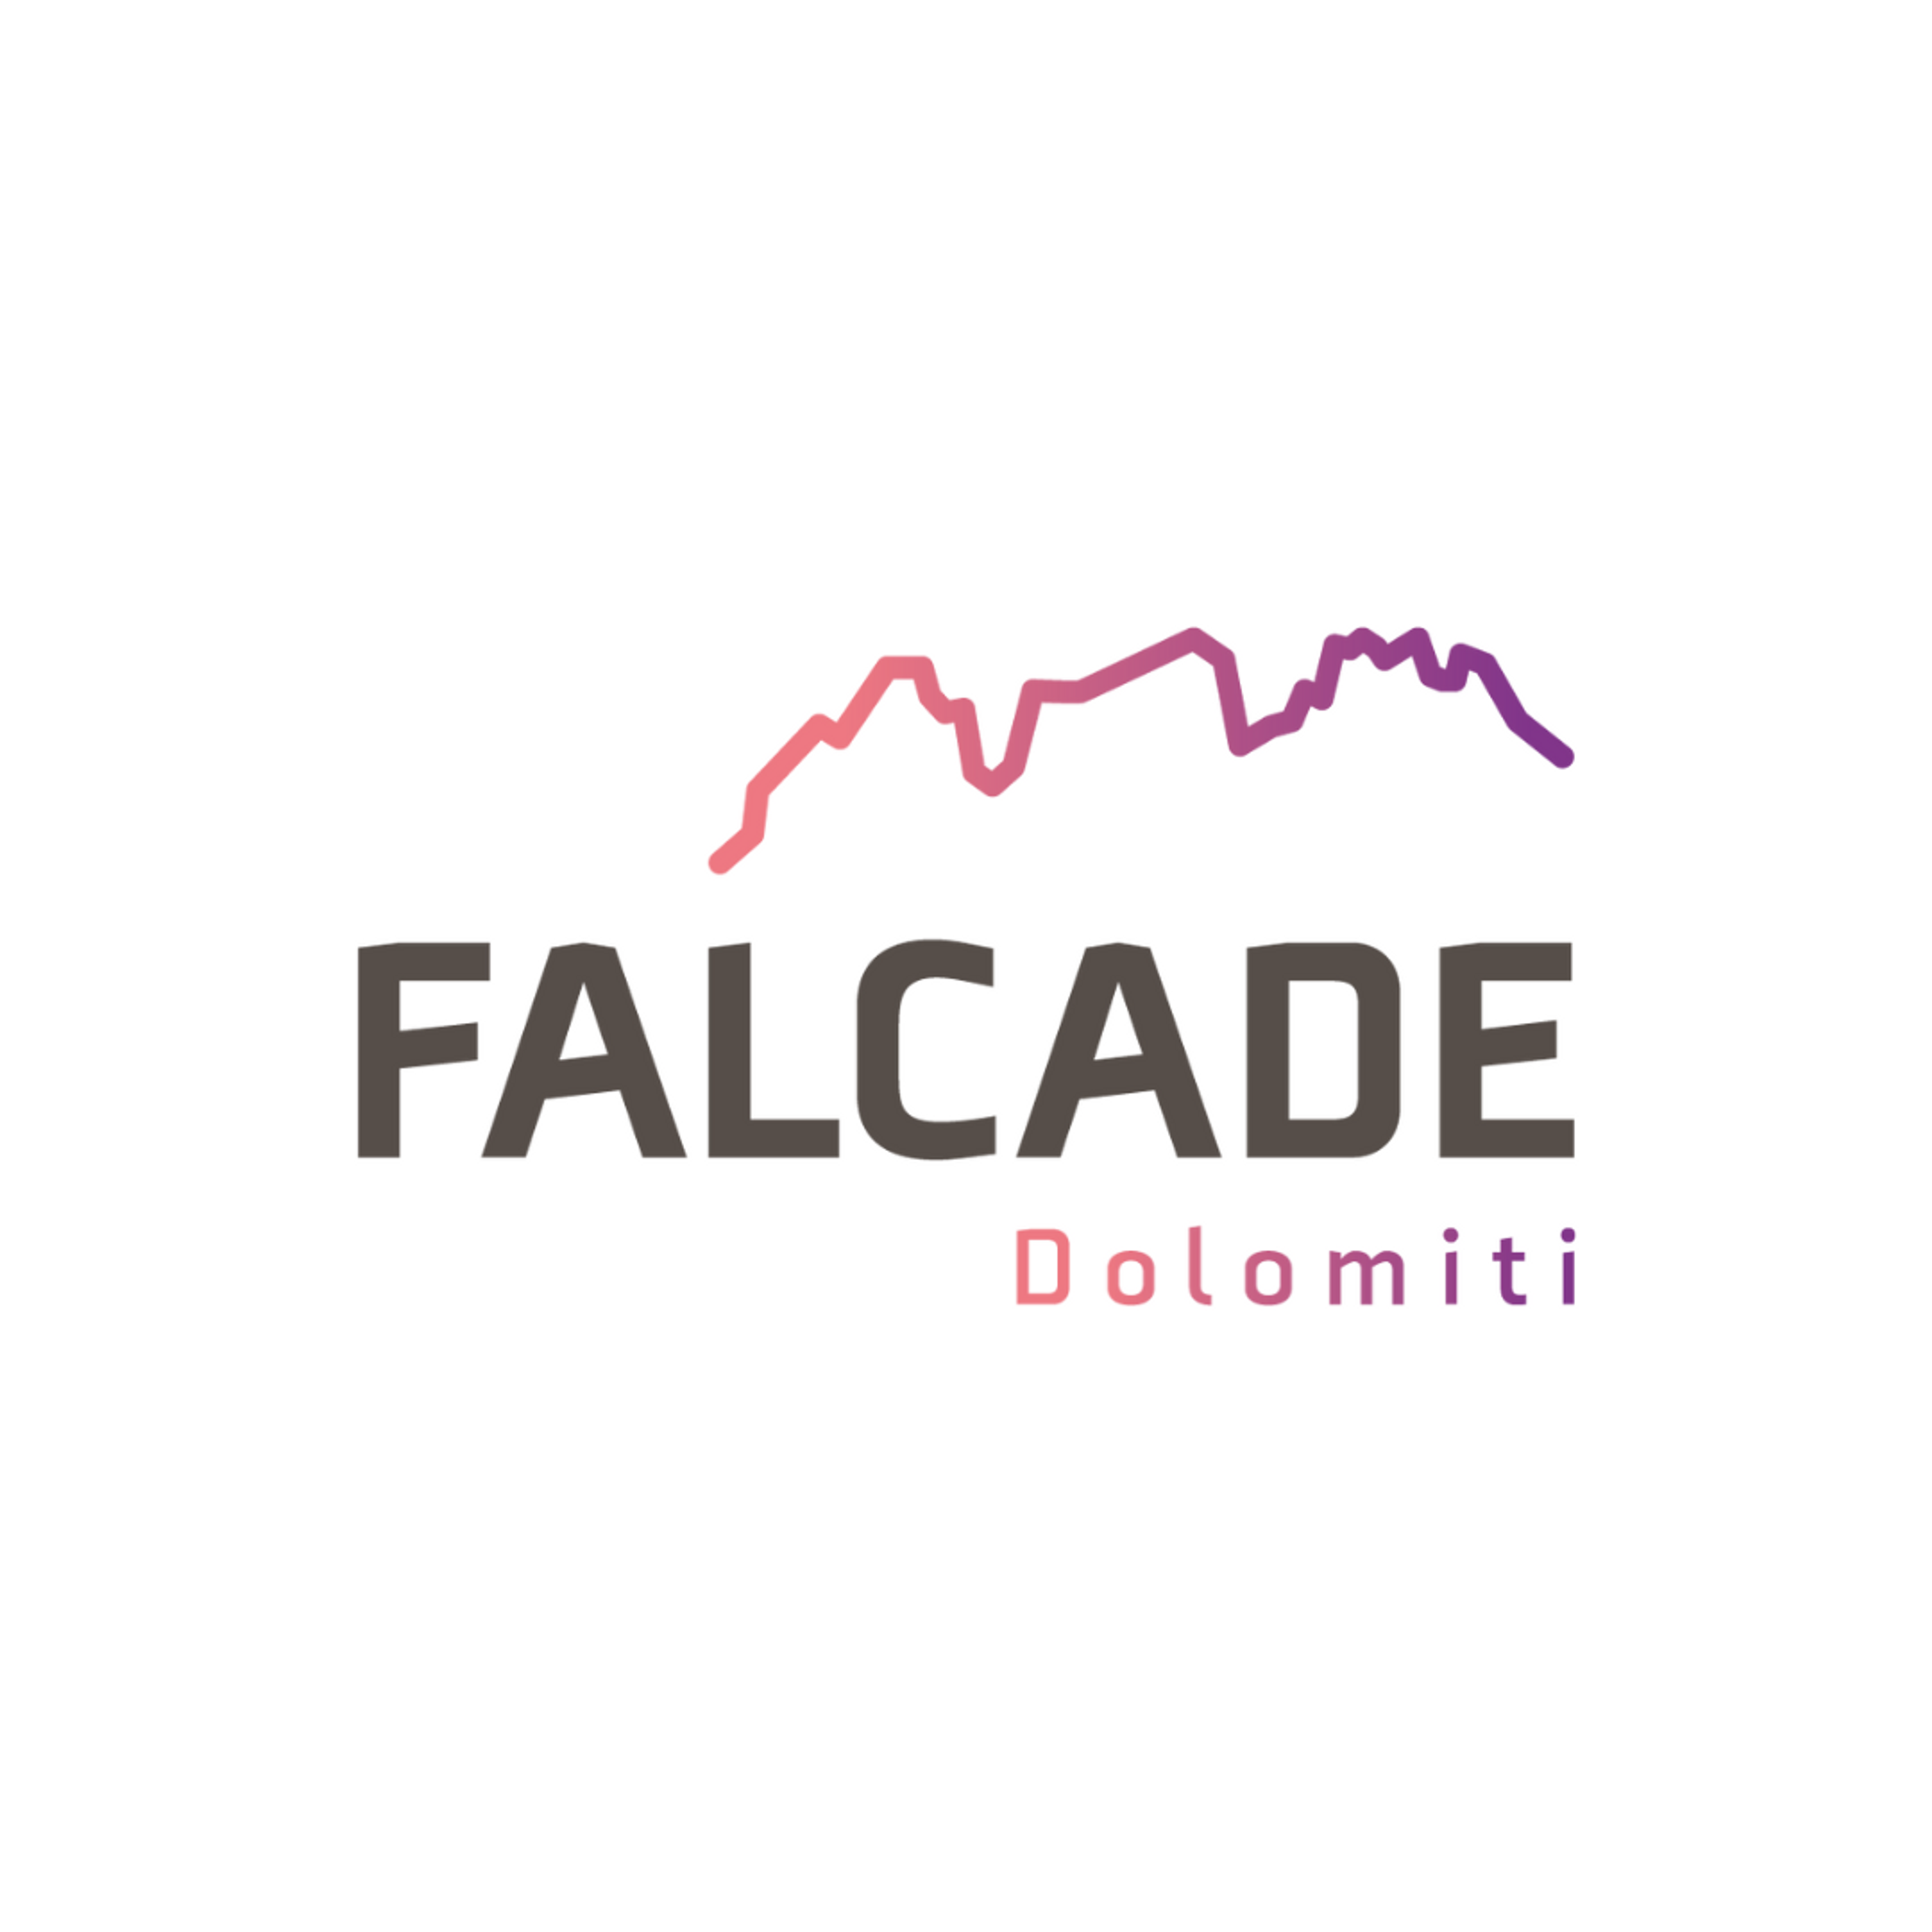 Falcade Dolomiti